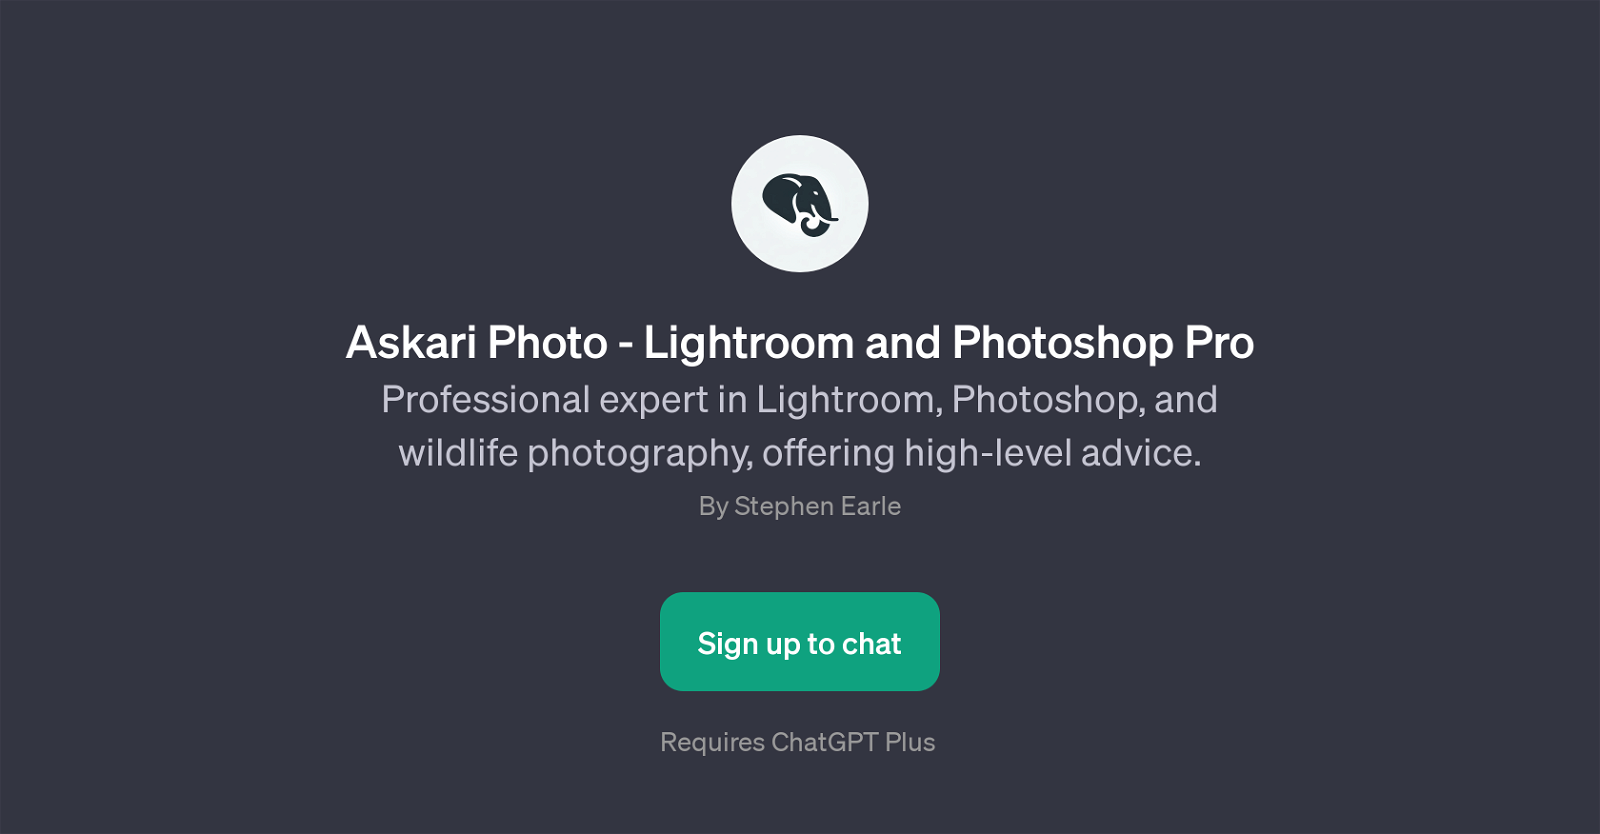 Askari Photo - Lightroom and Photoshop Pro website